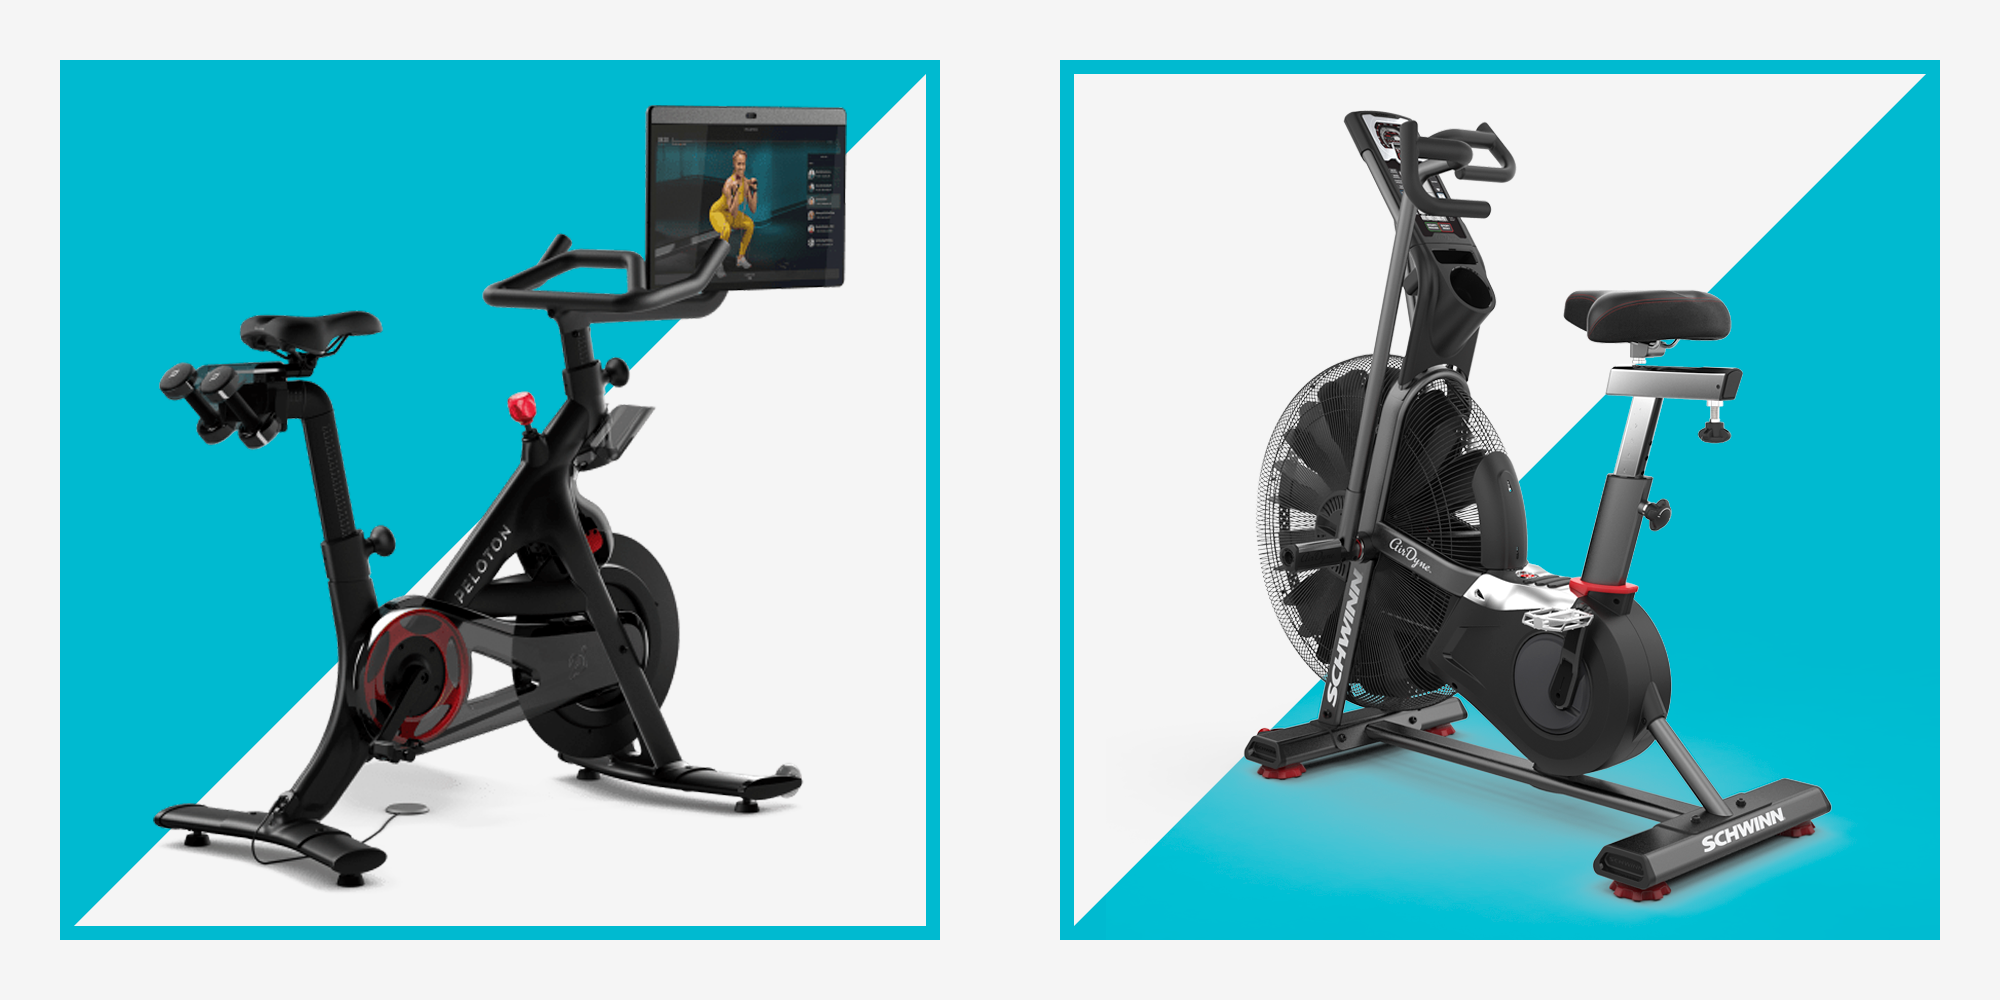 Exercise Spin Bike Home Gym Bike Cycling Cardio Fitness Training Workout Bike UK 